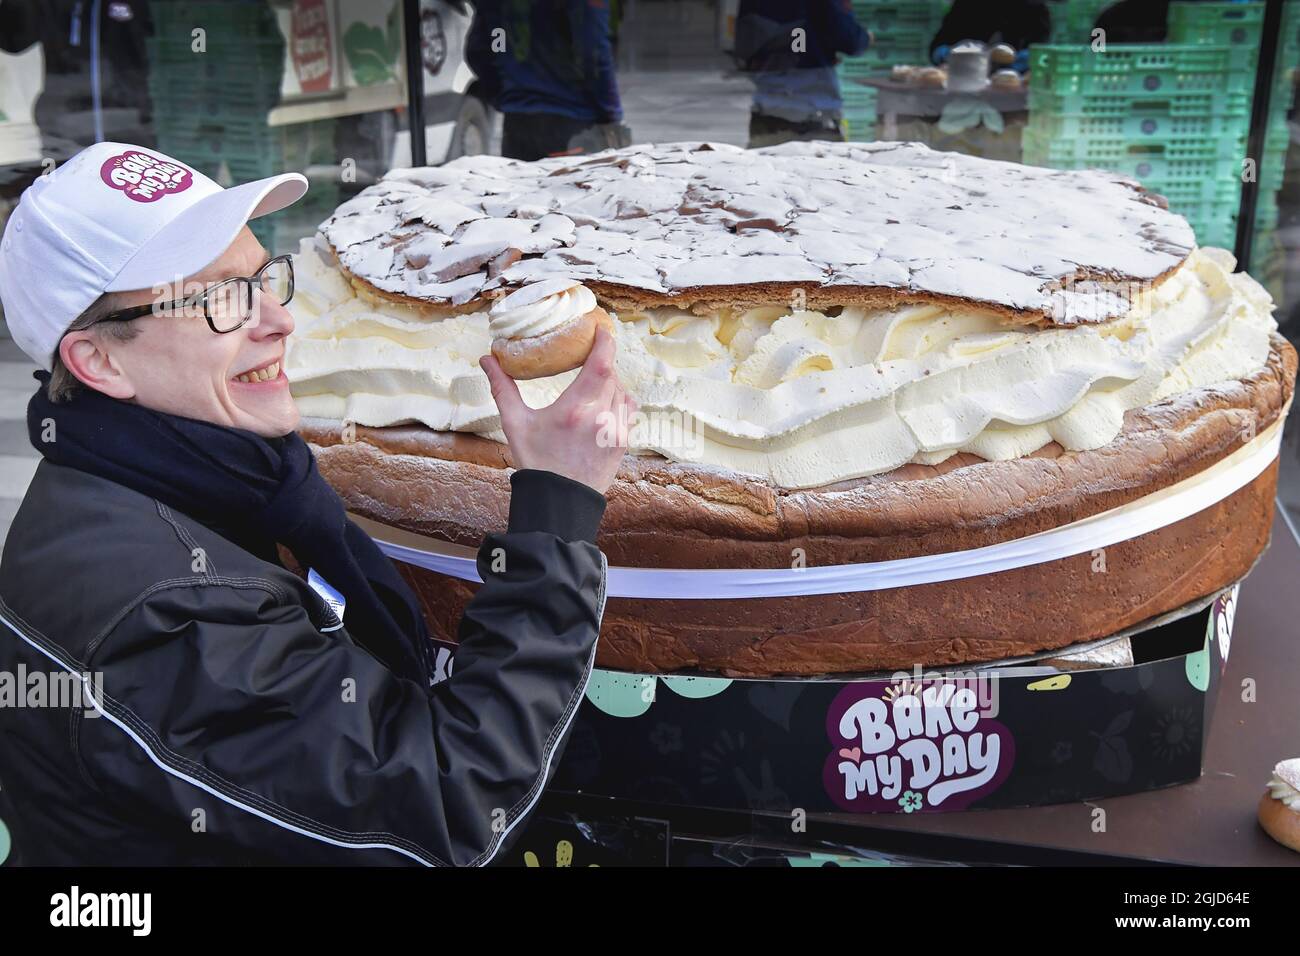 worlds biggest cake guinness world records